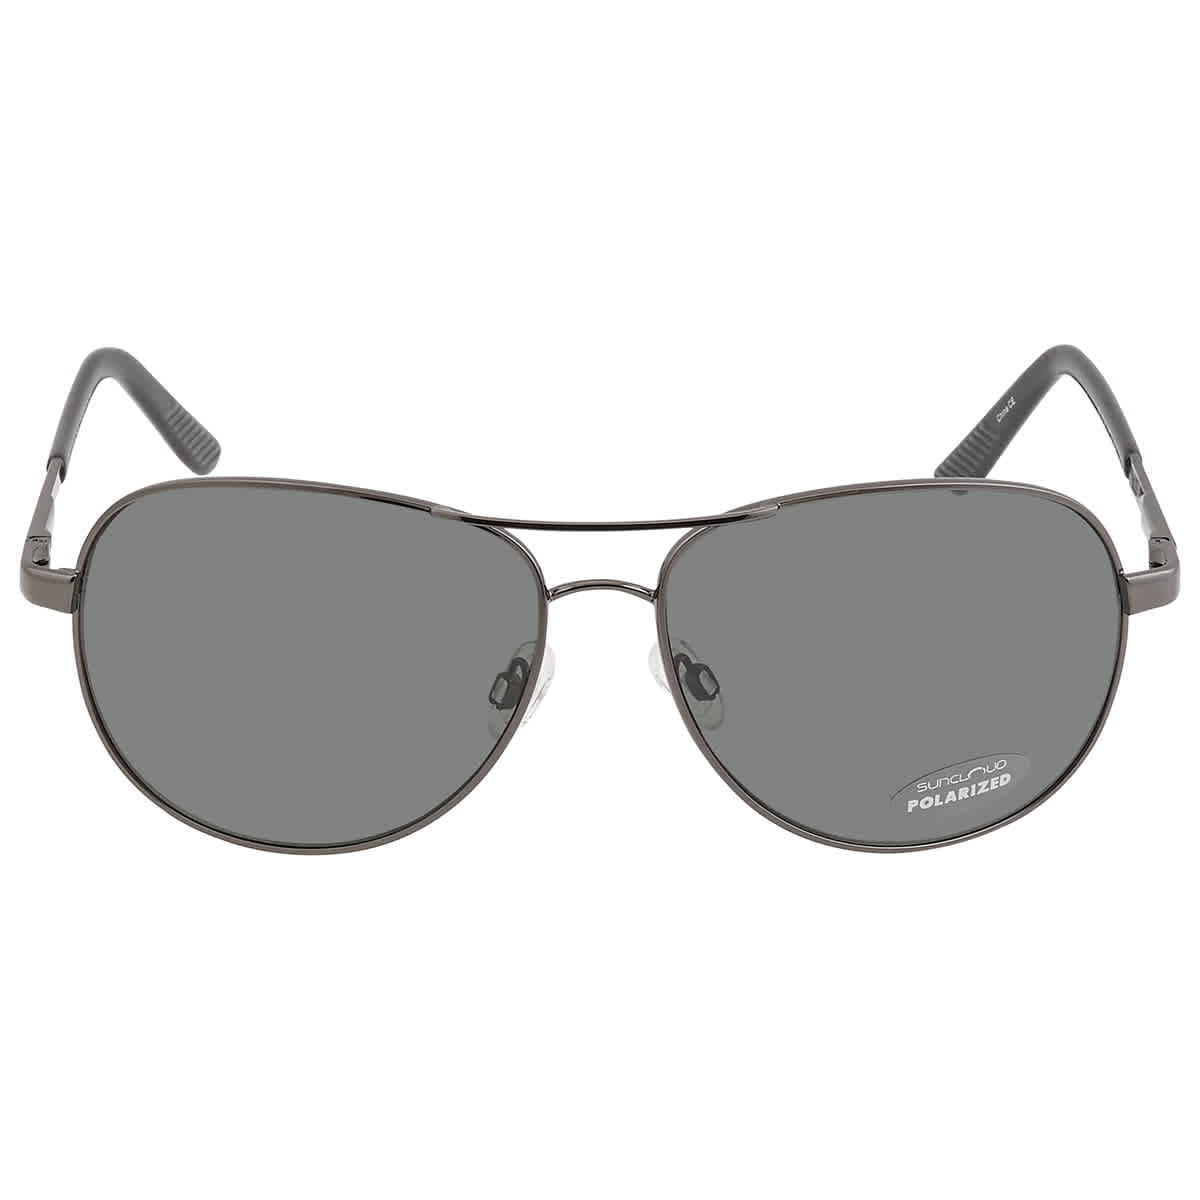 Aggregate more than 69 suncloud aviator sunglasses